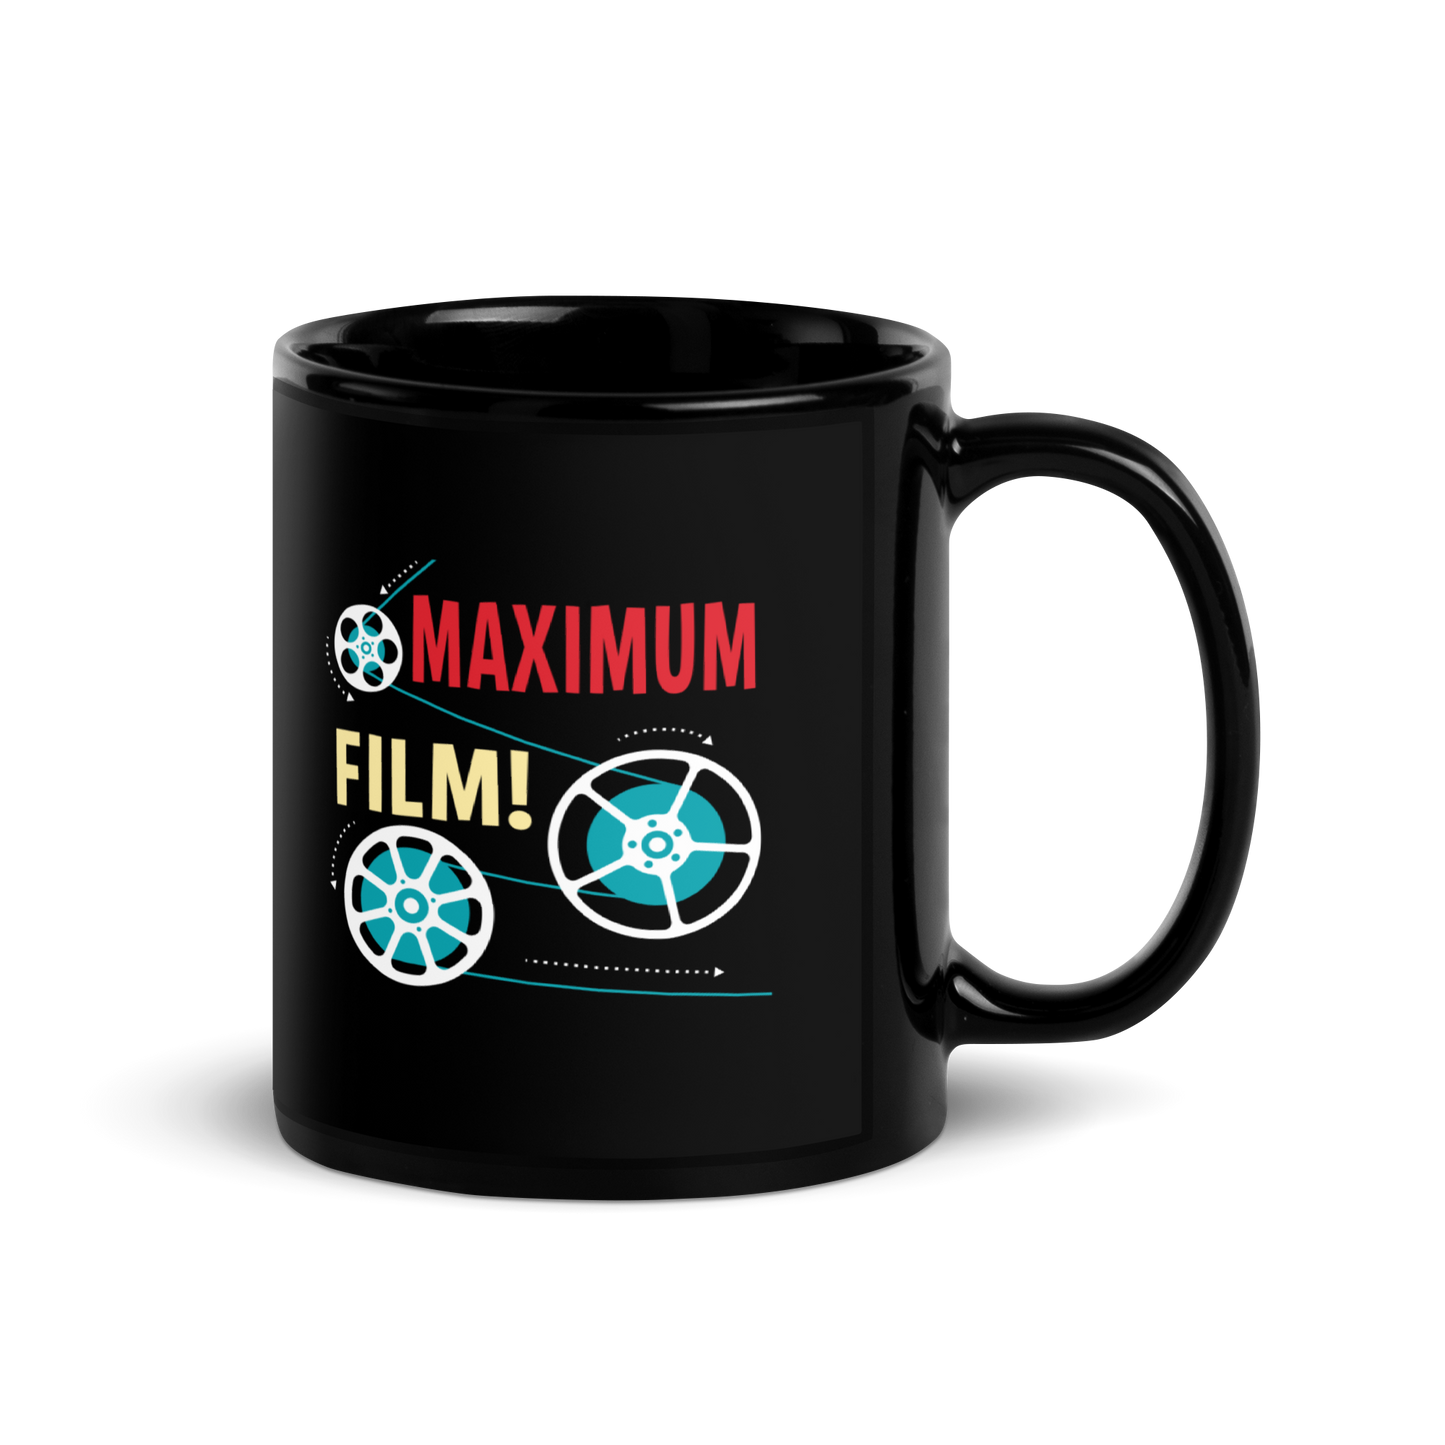 Maximum Film! logo mug